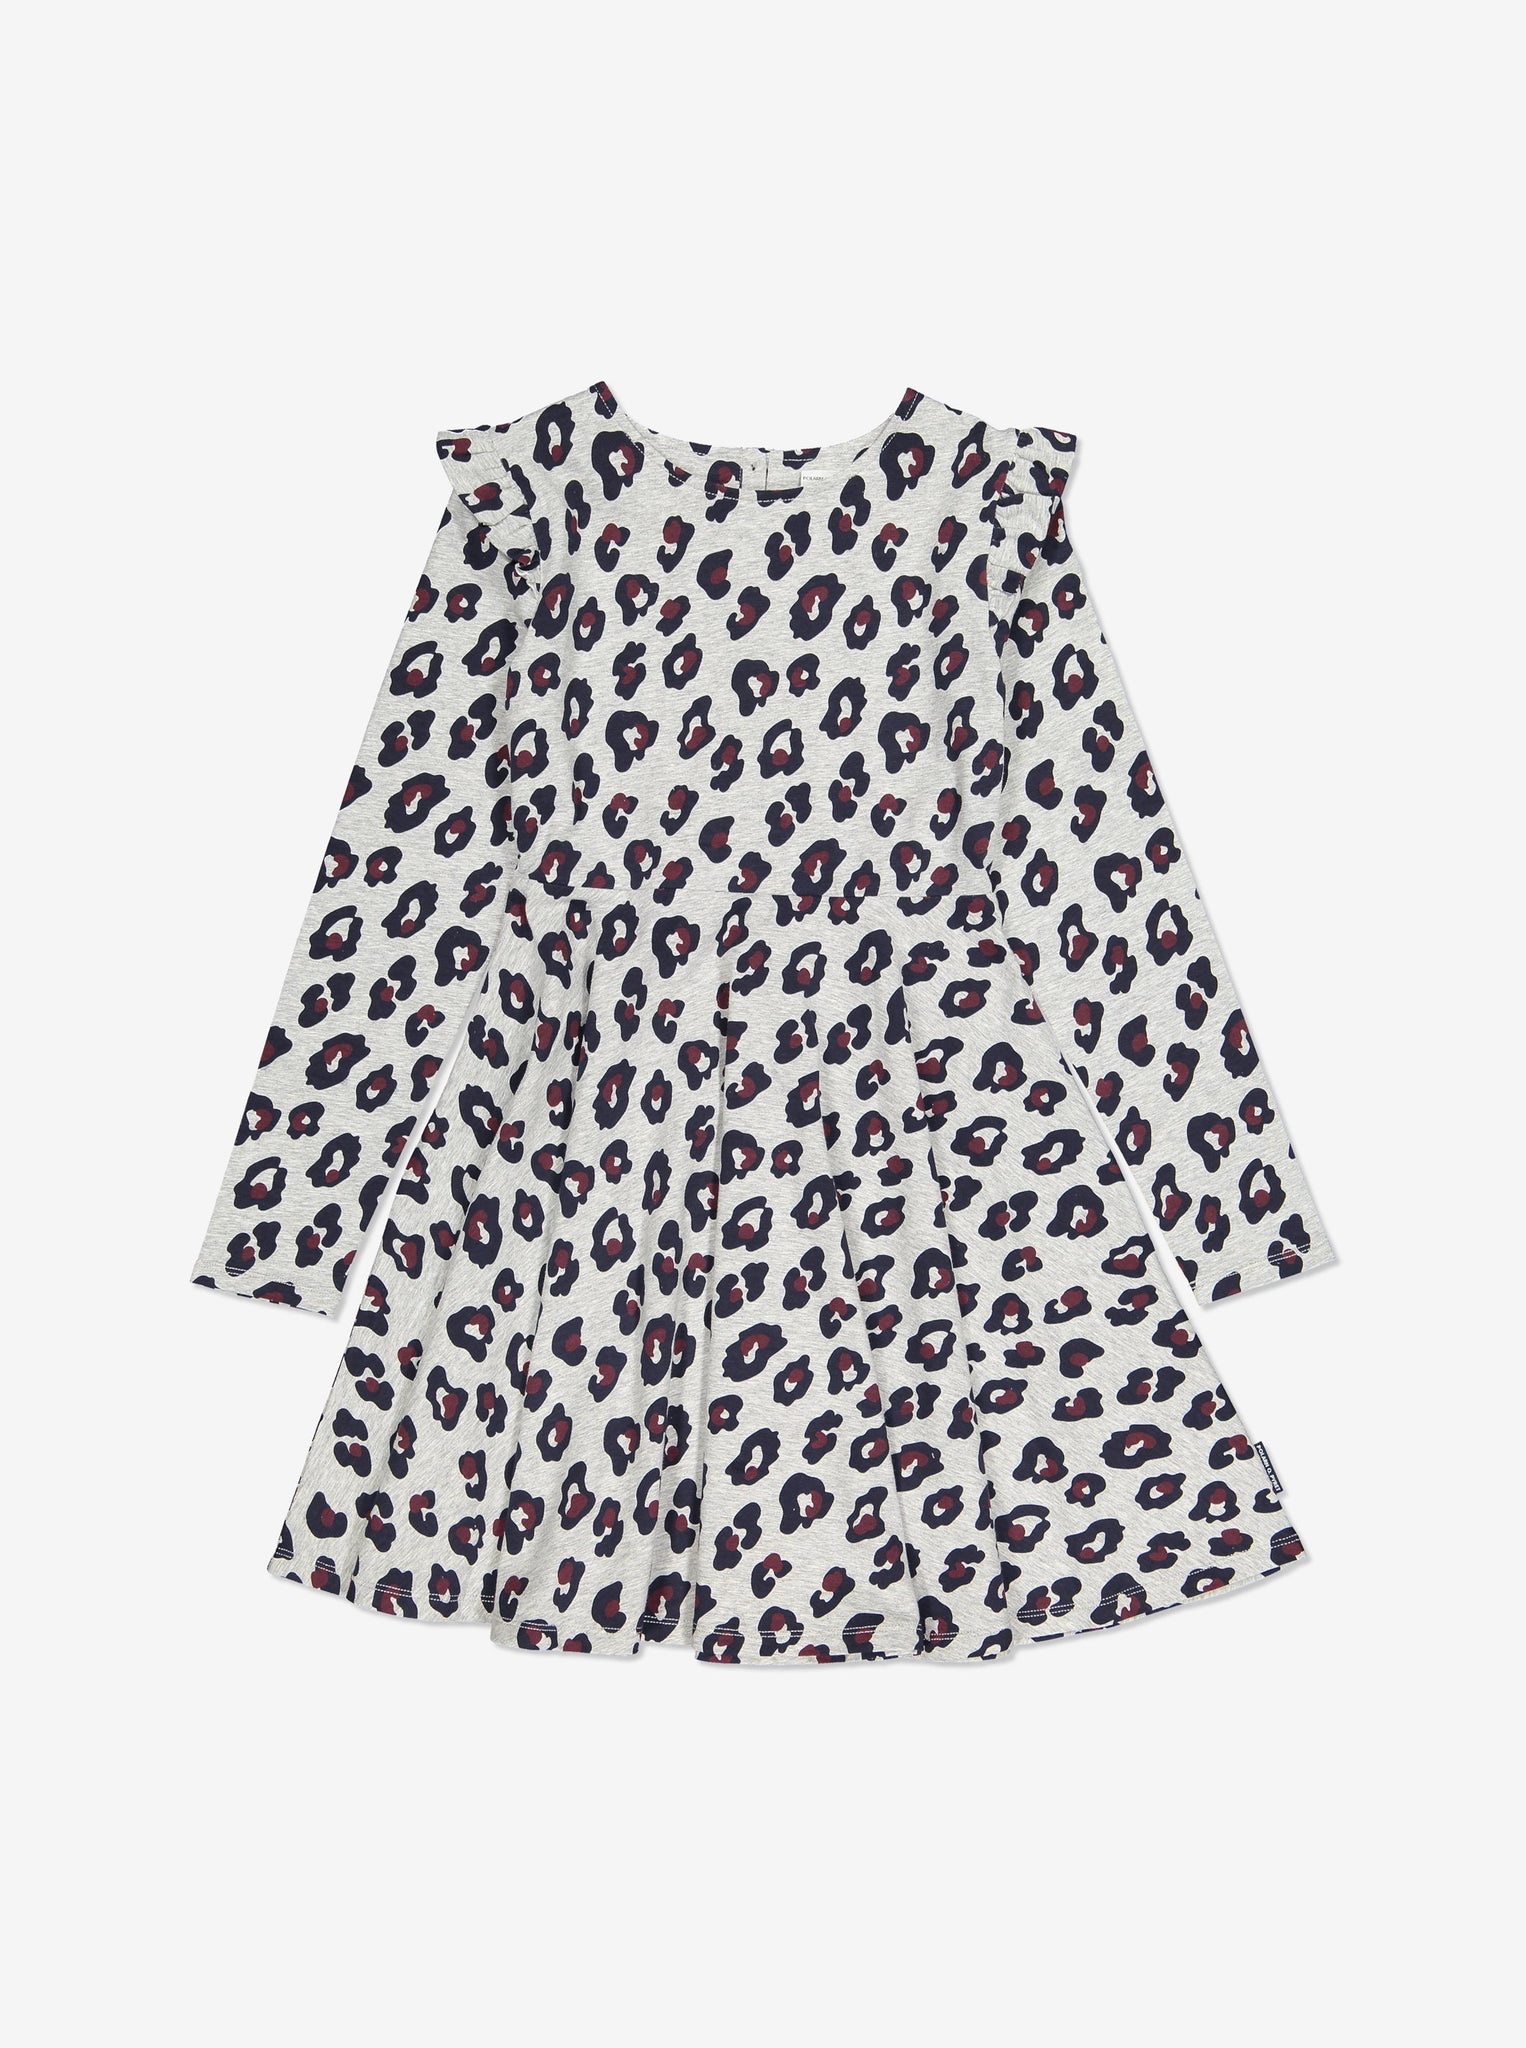 Leopard Print Kids Dress-Girl-6-12y-Grey